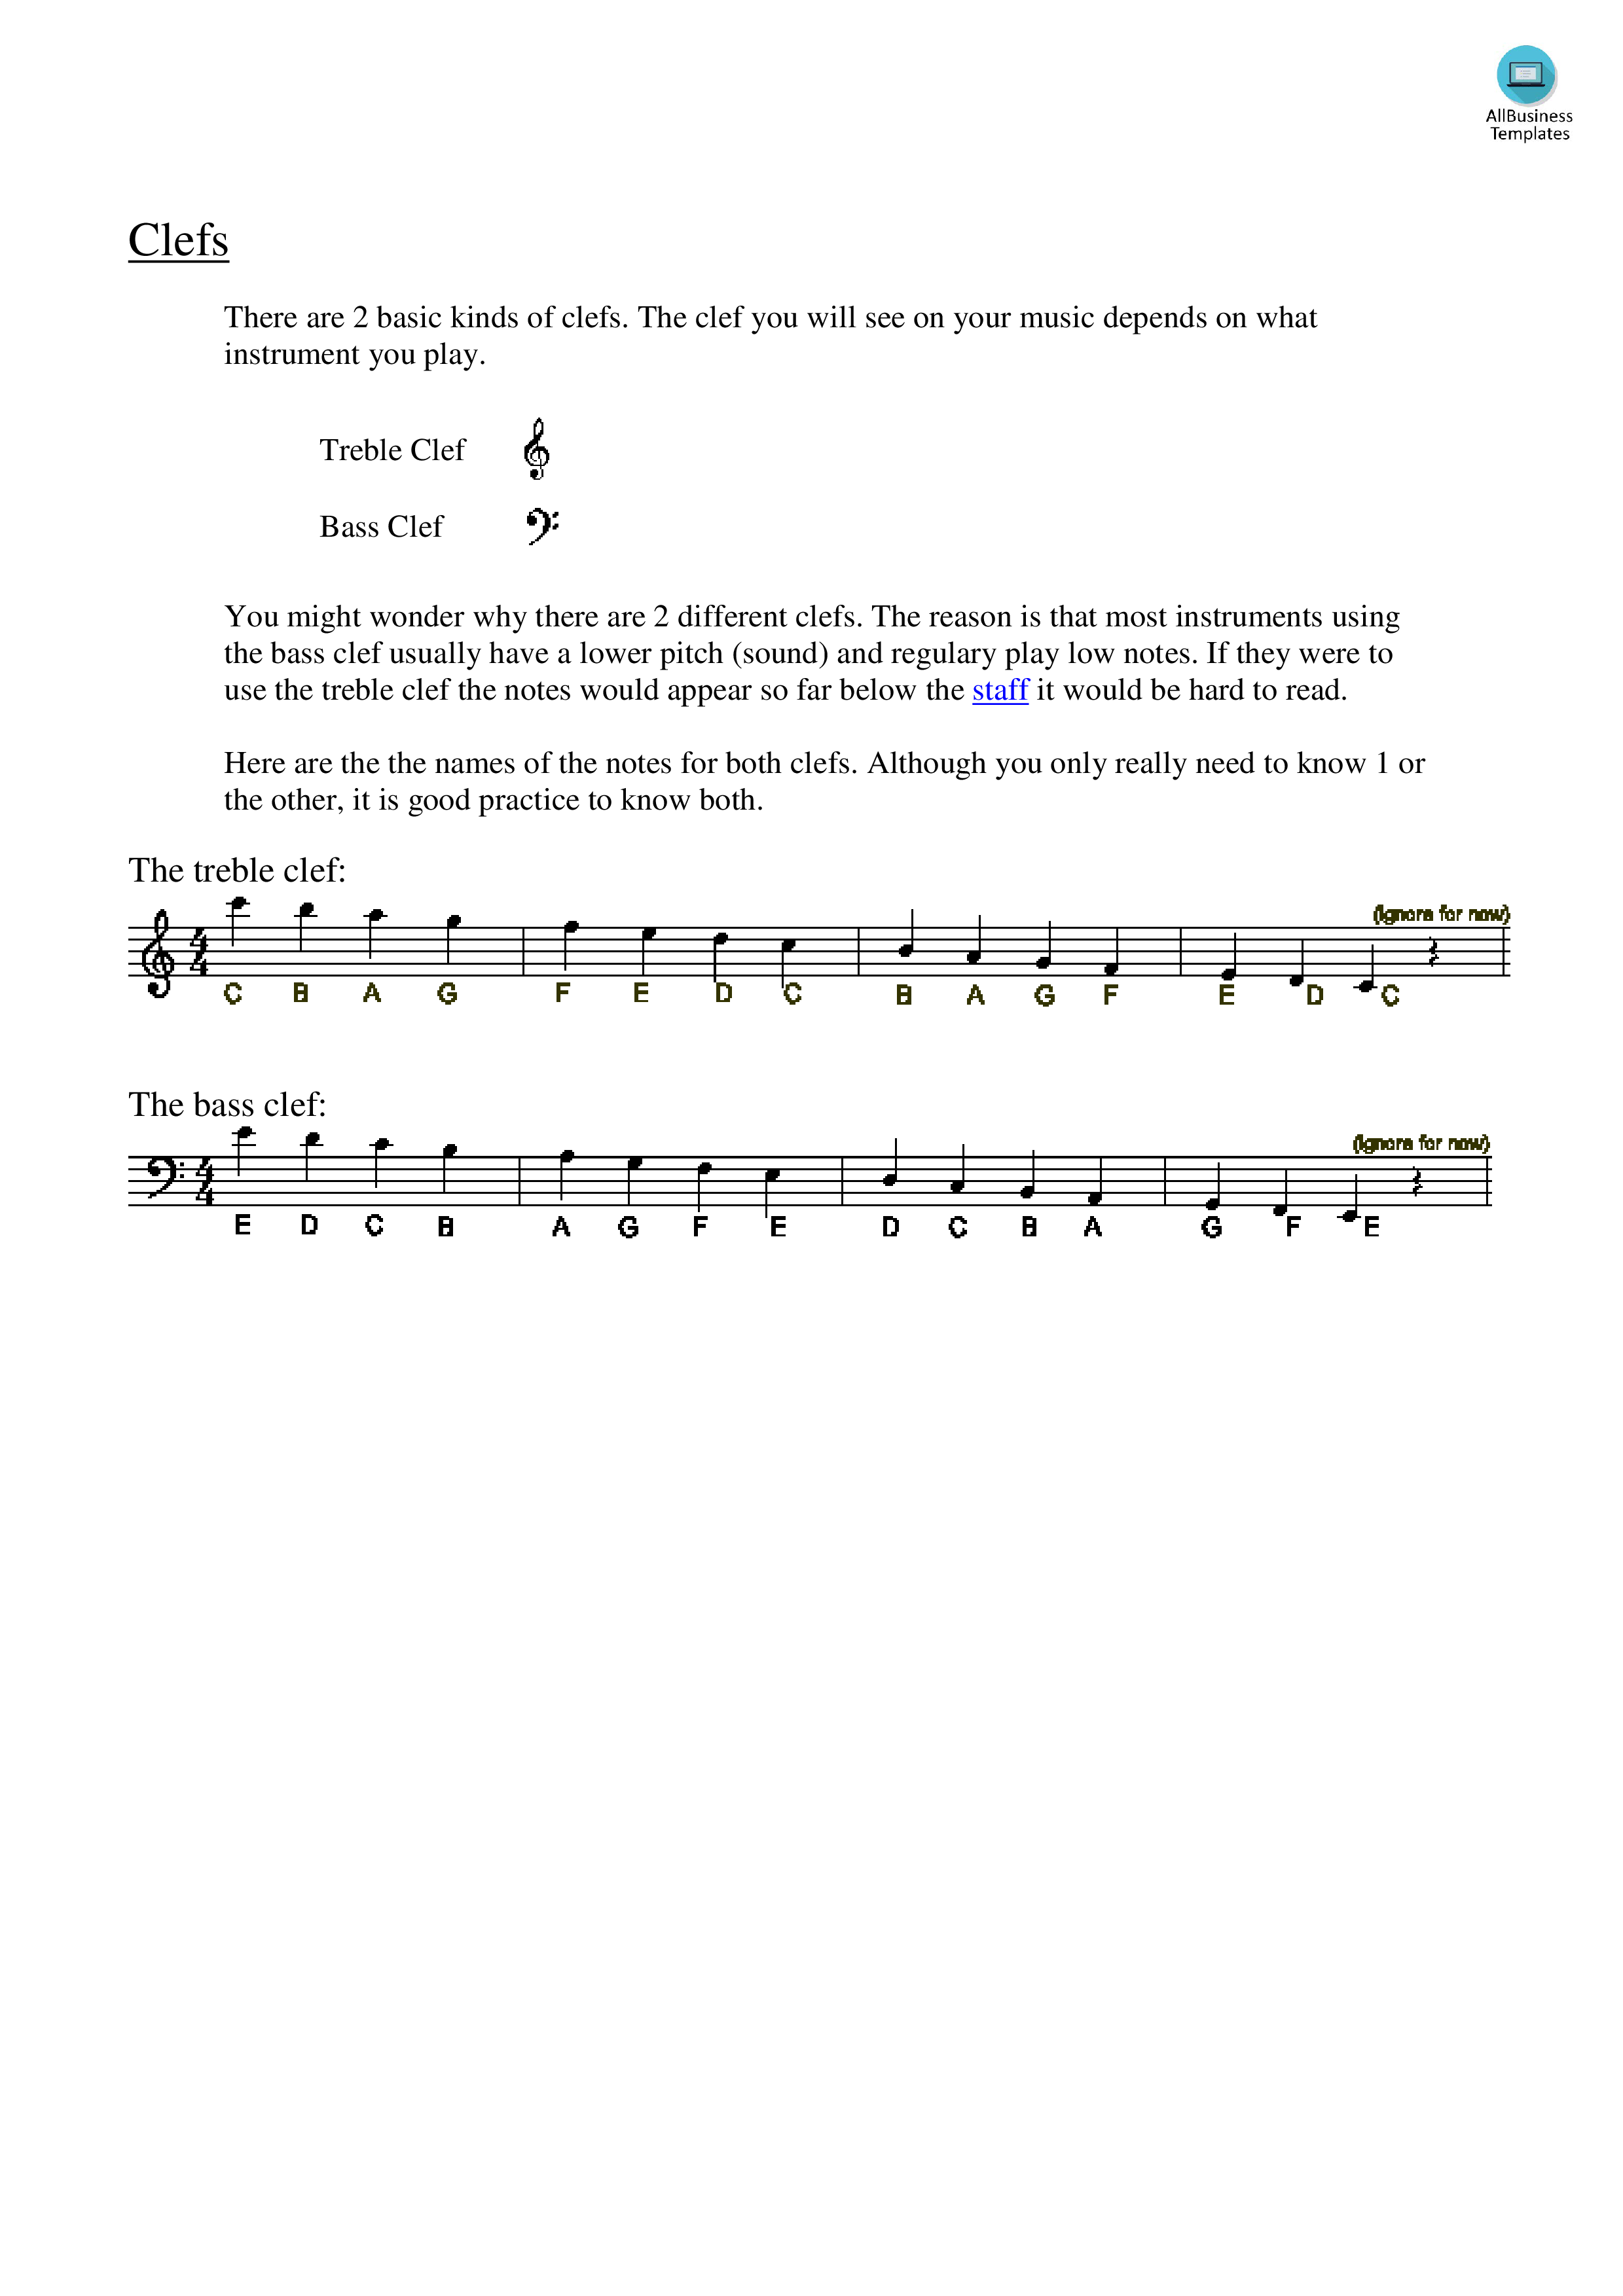 piano clef notes chart plantilla imagen principal